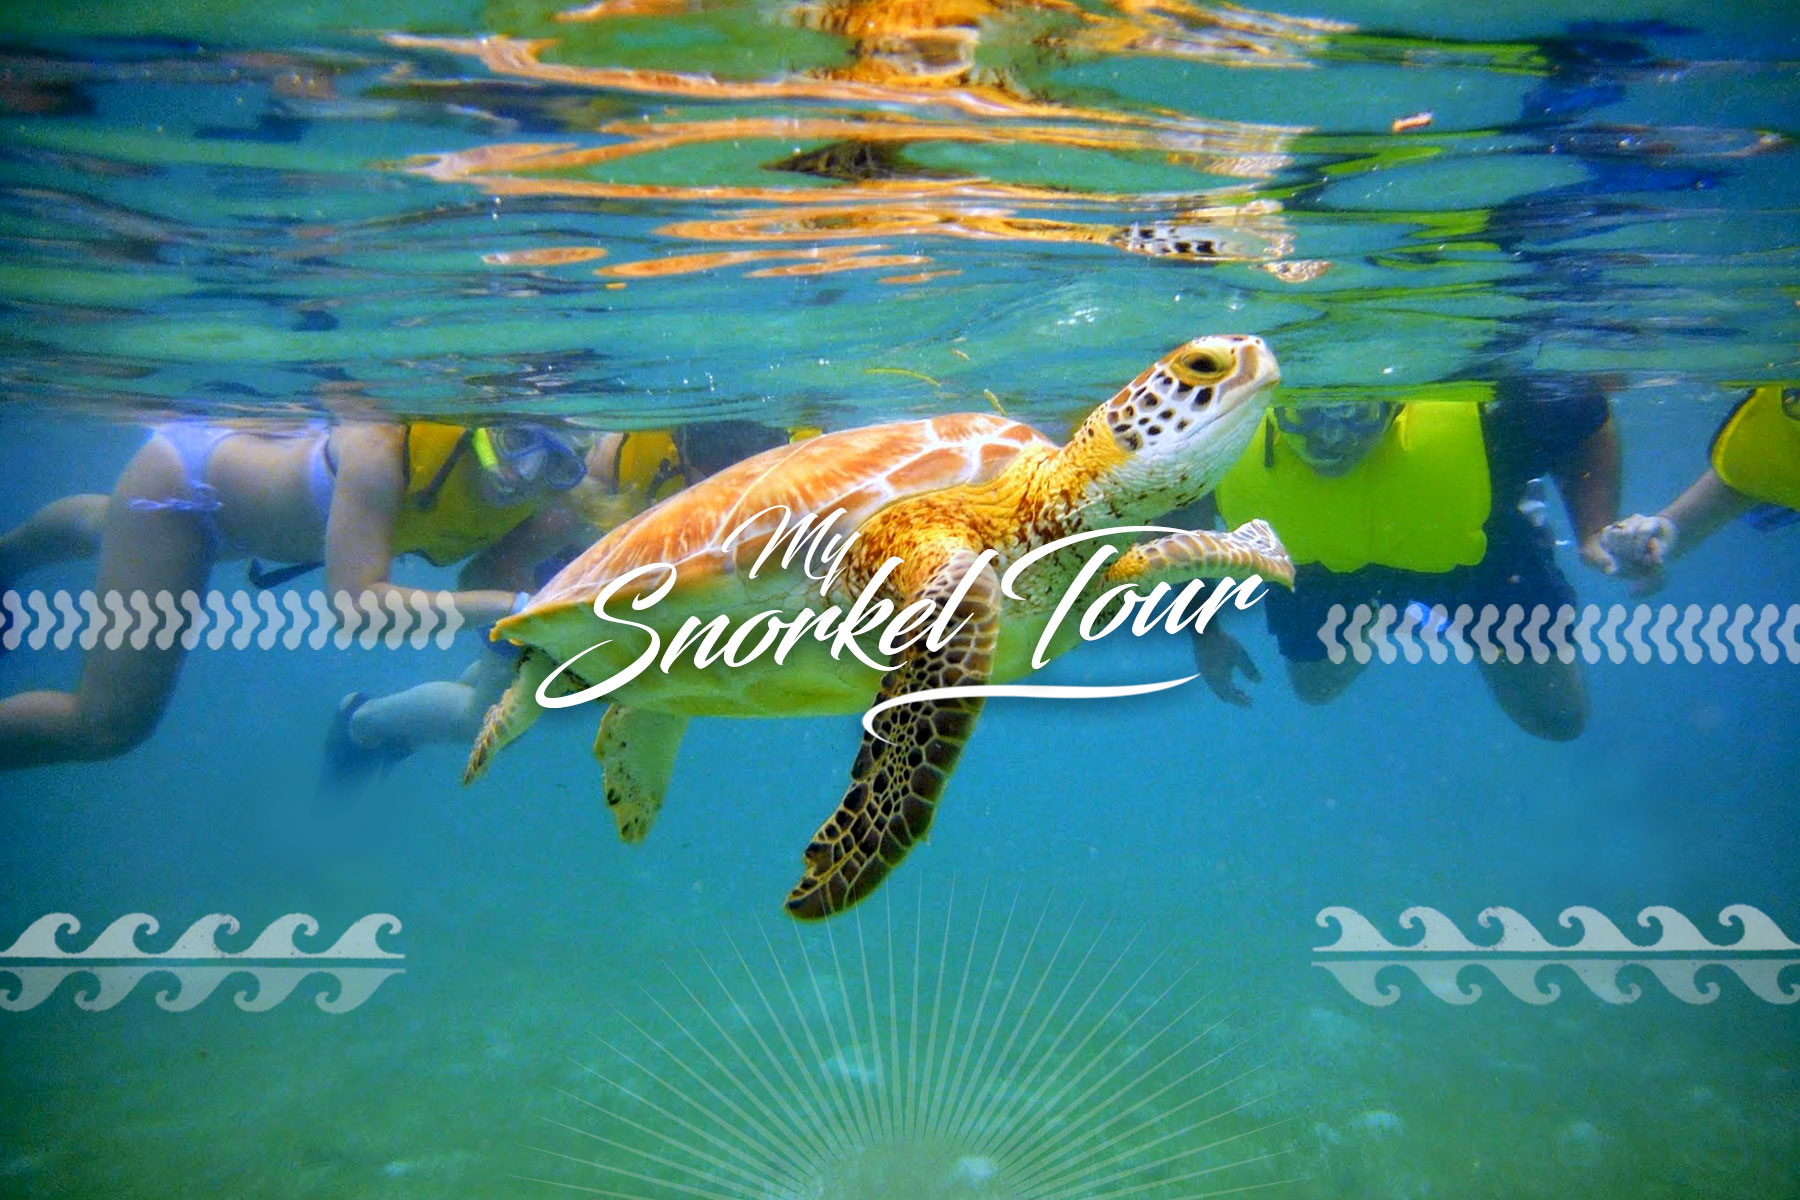 Private Tours Cancun Tulum Riviera Maya Mexico